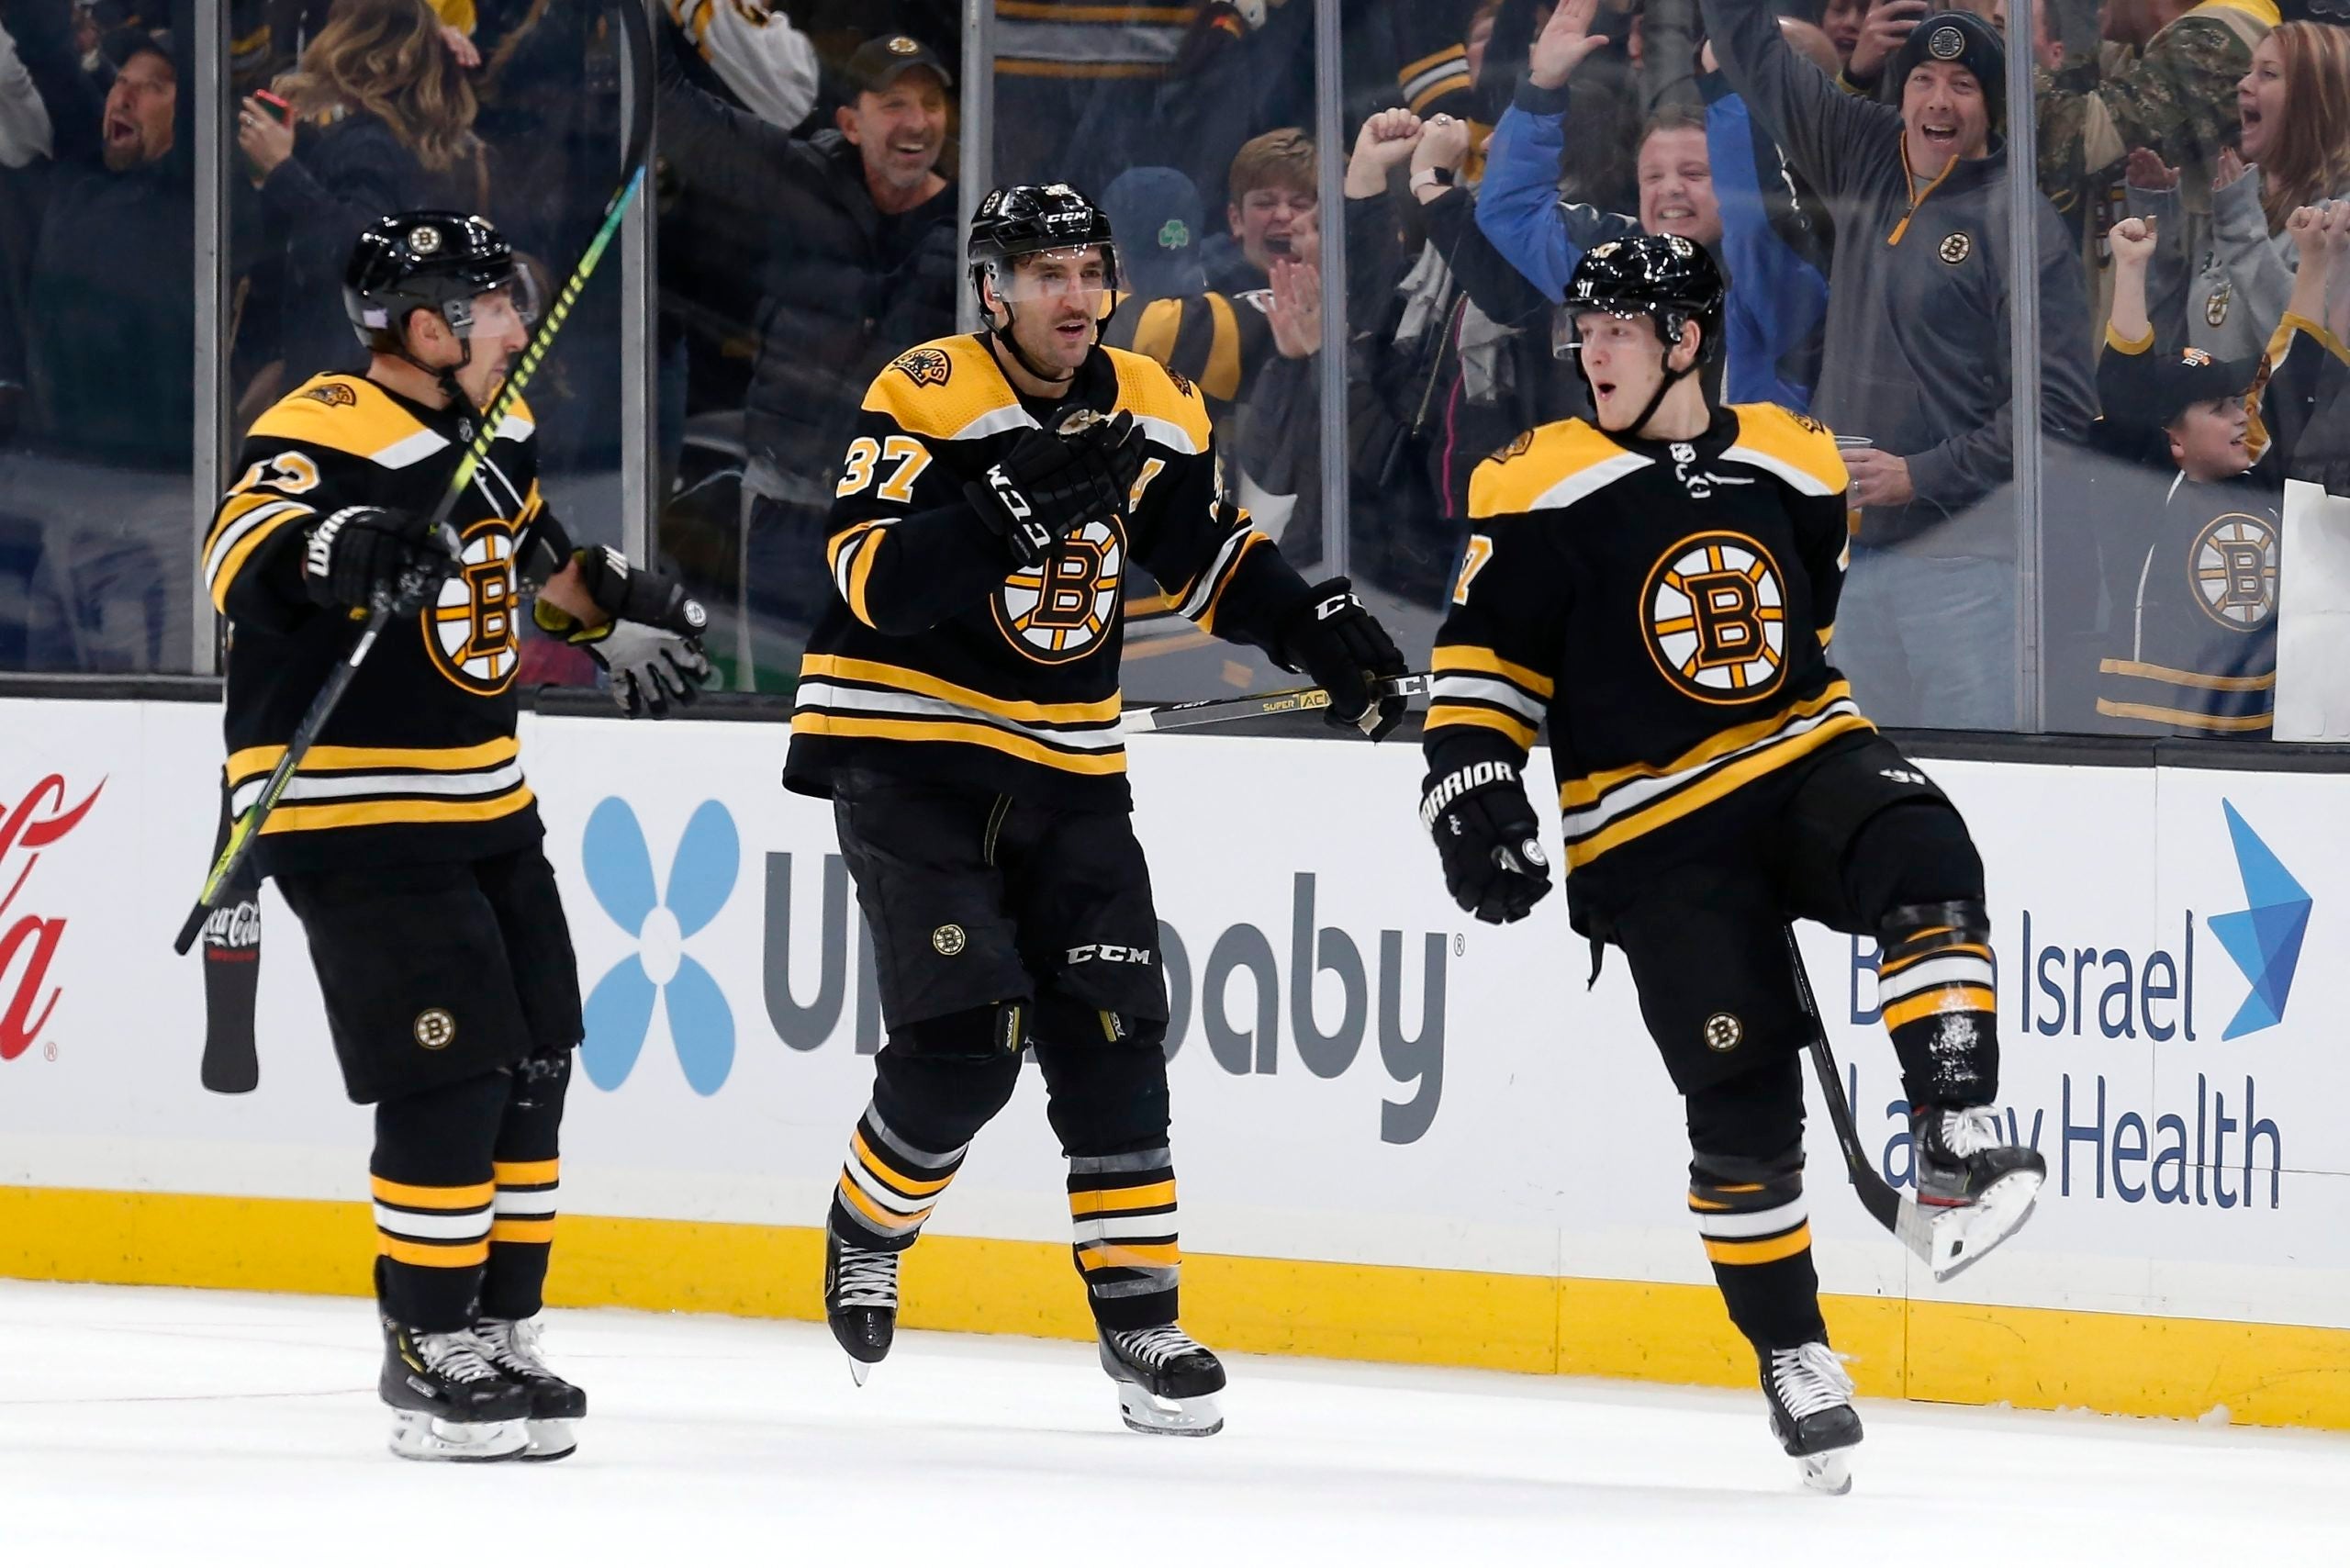 Bruins vs. Rangers Game 1 update: Overtime needed after Torey